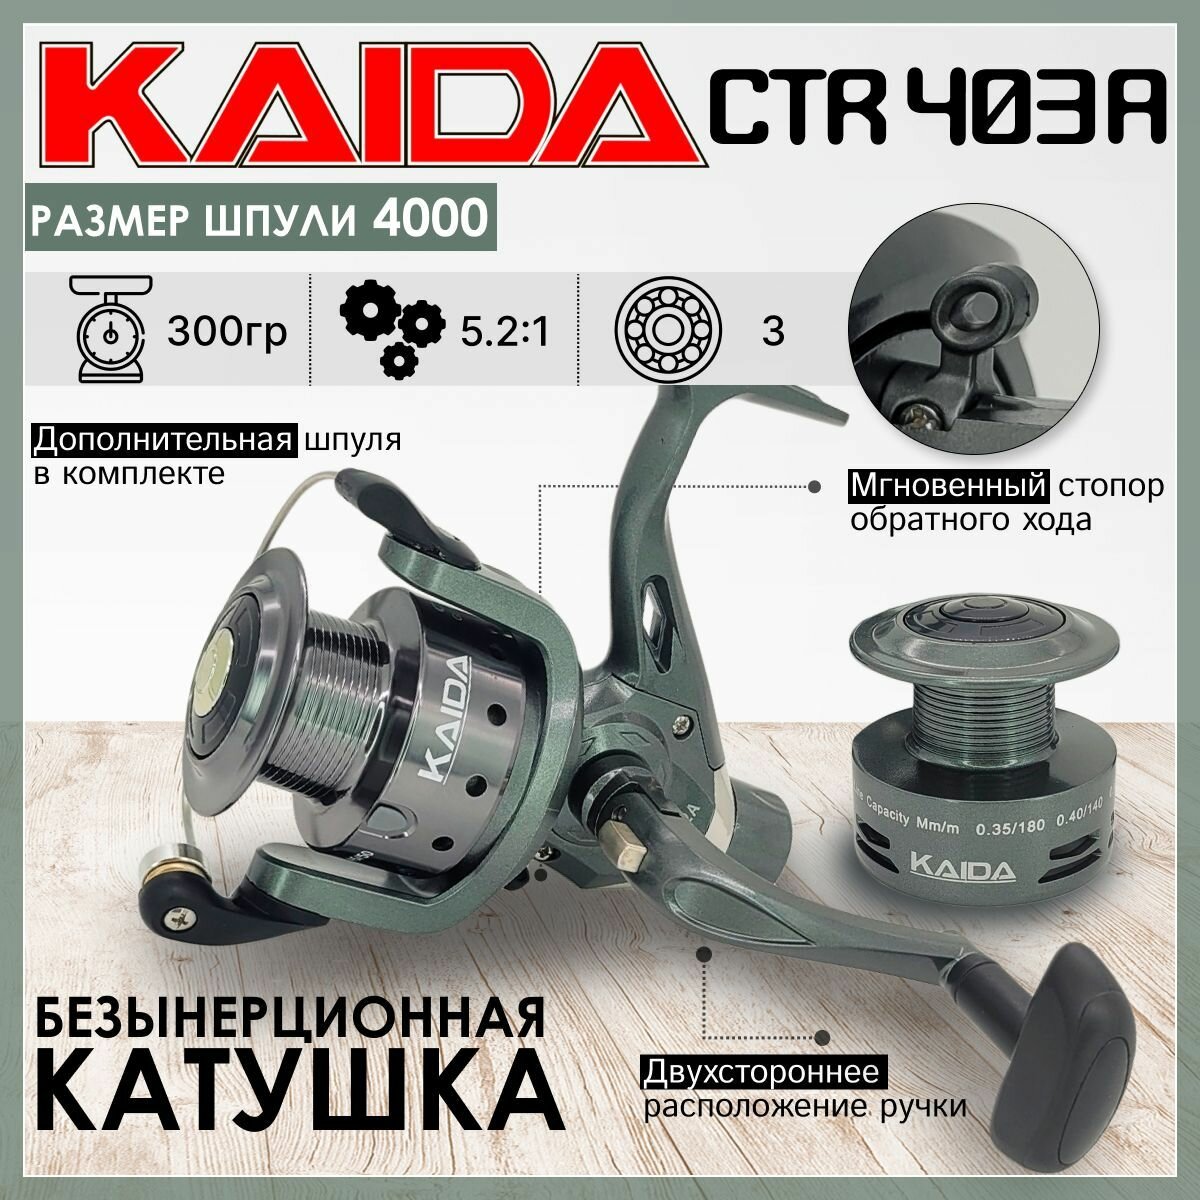 Катушка Kaida CTR-403A с задним фрикционом